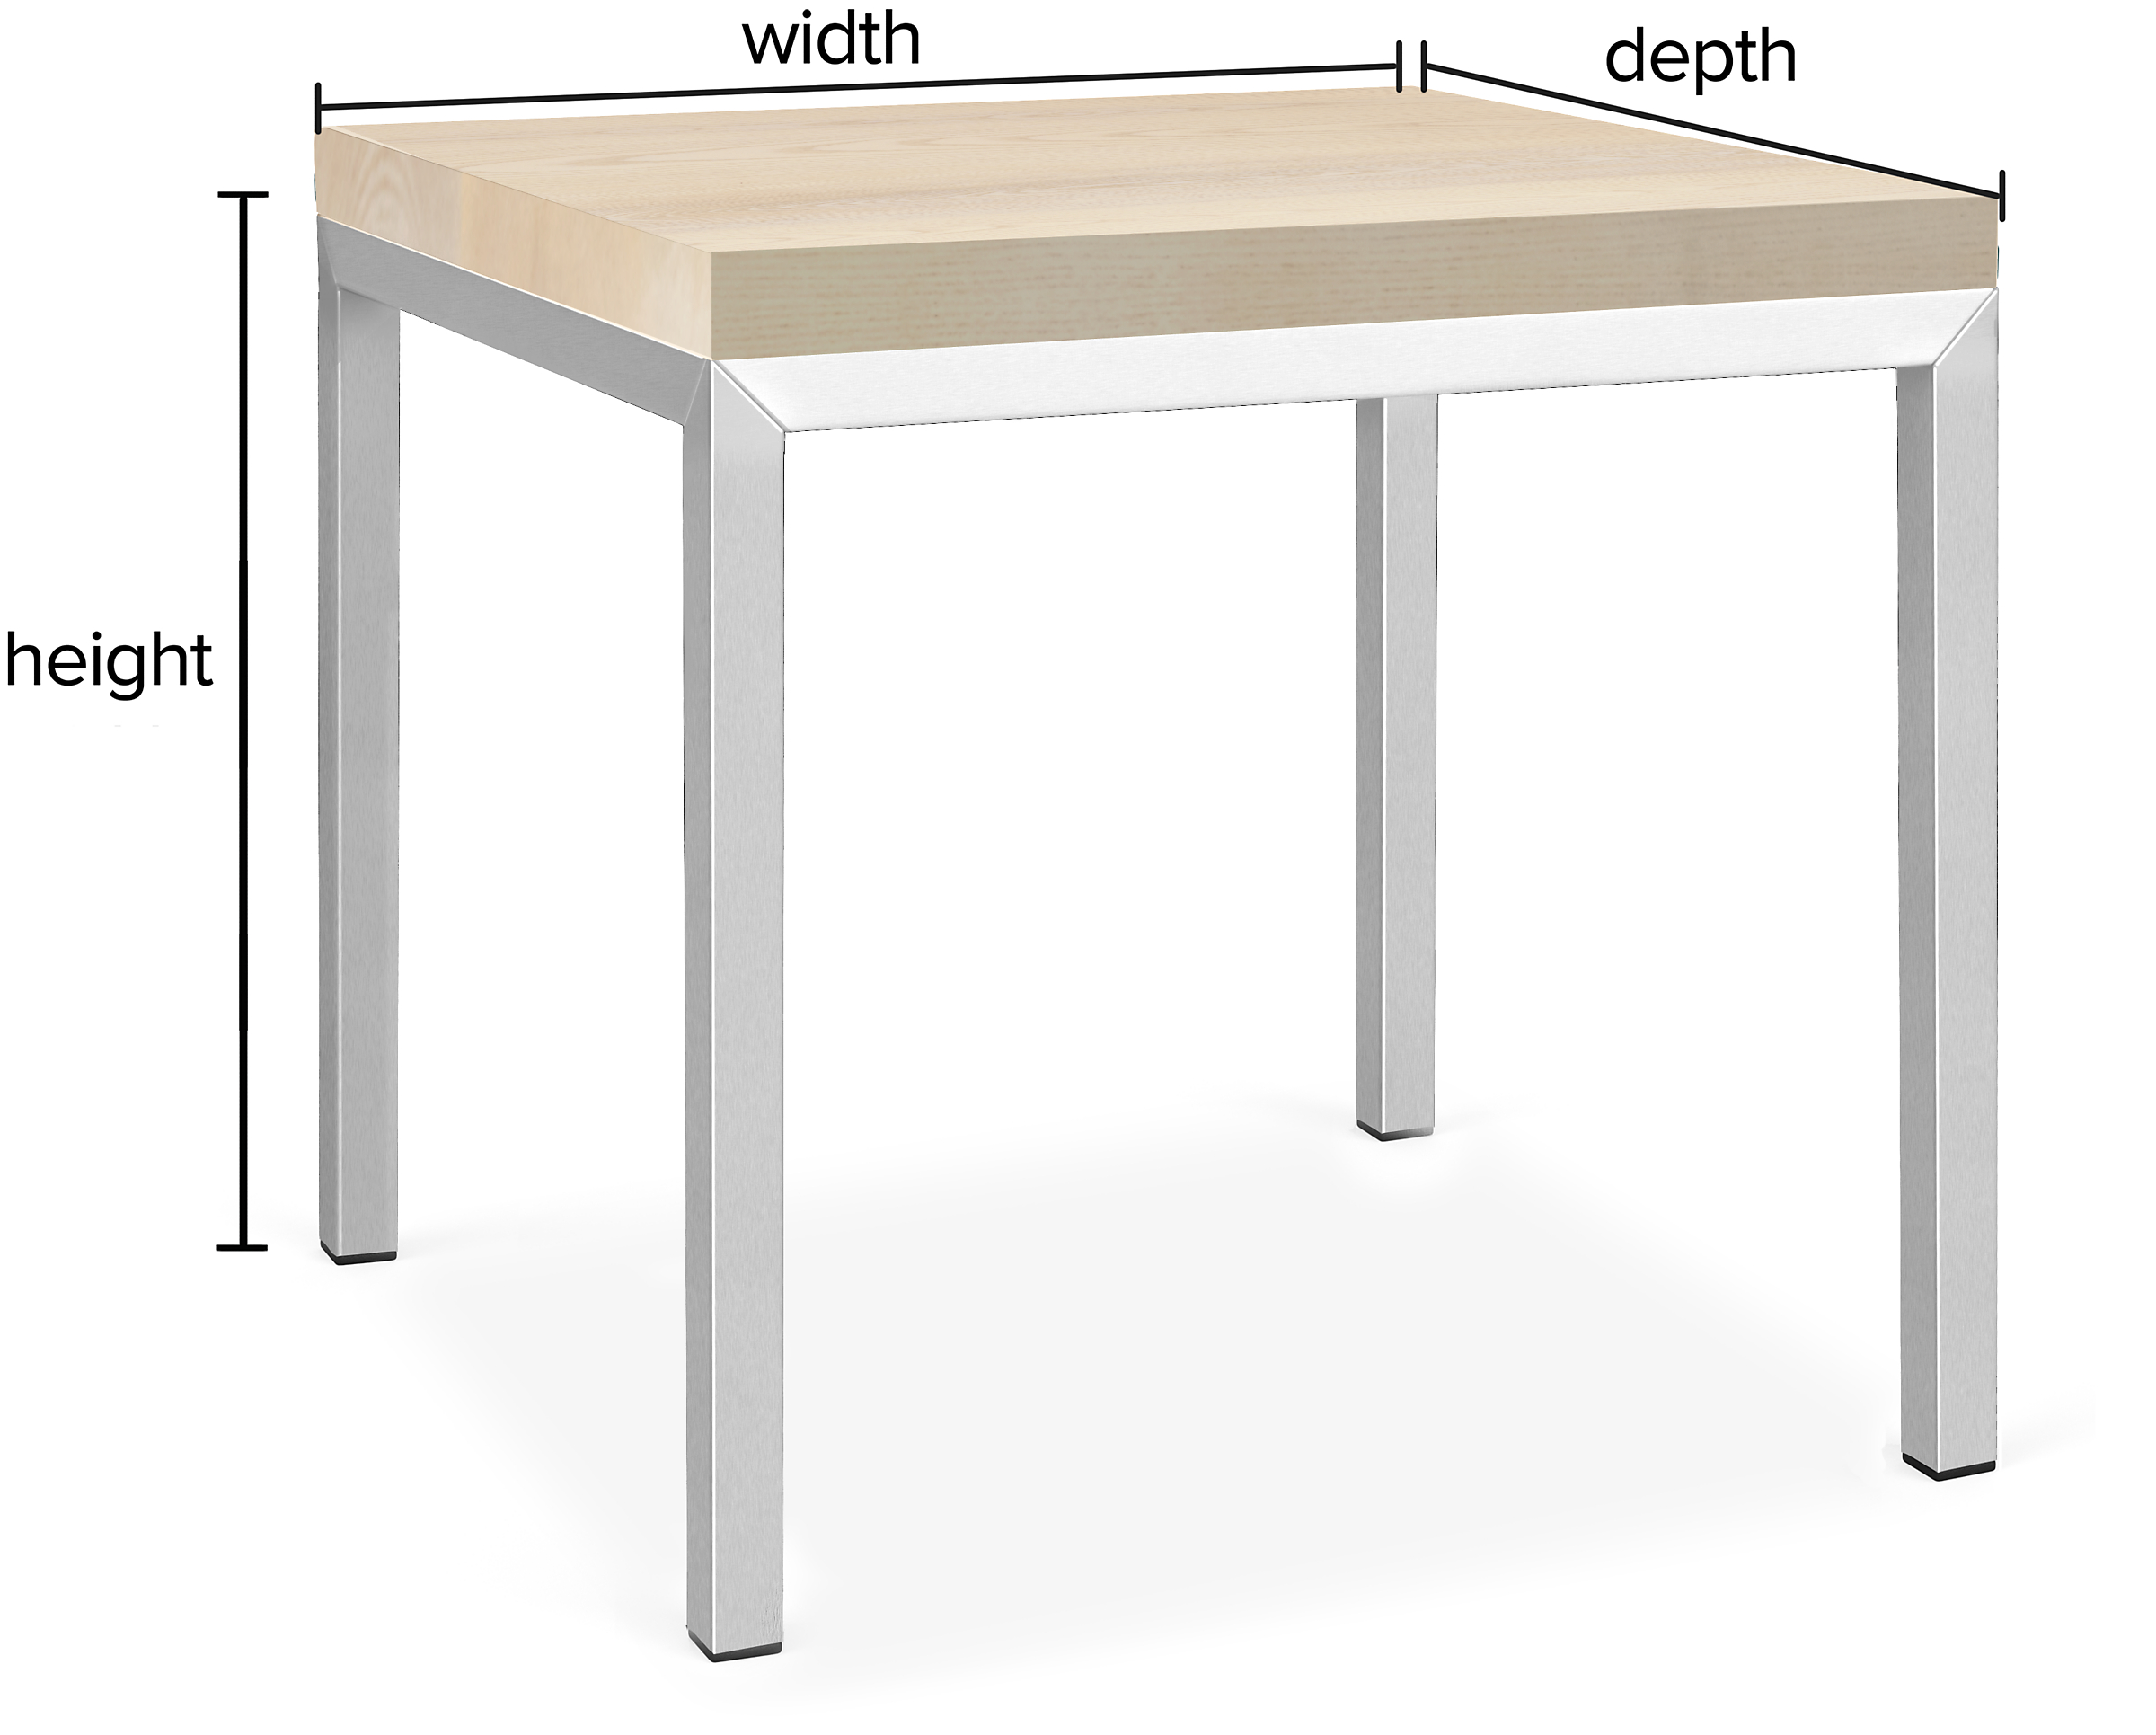 Parsons Custom Table with 1" Leg